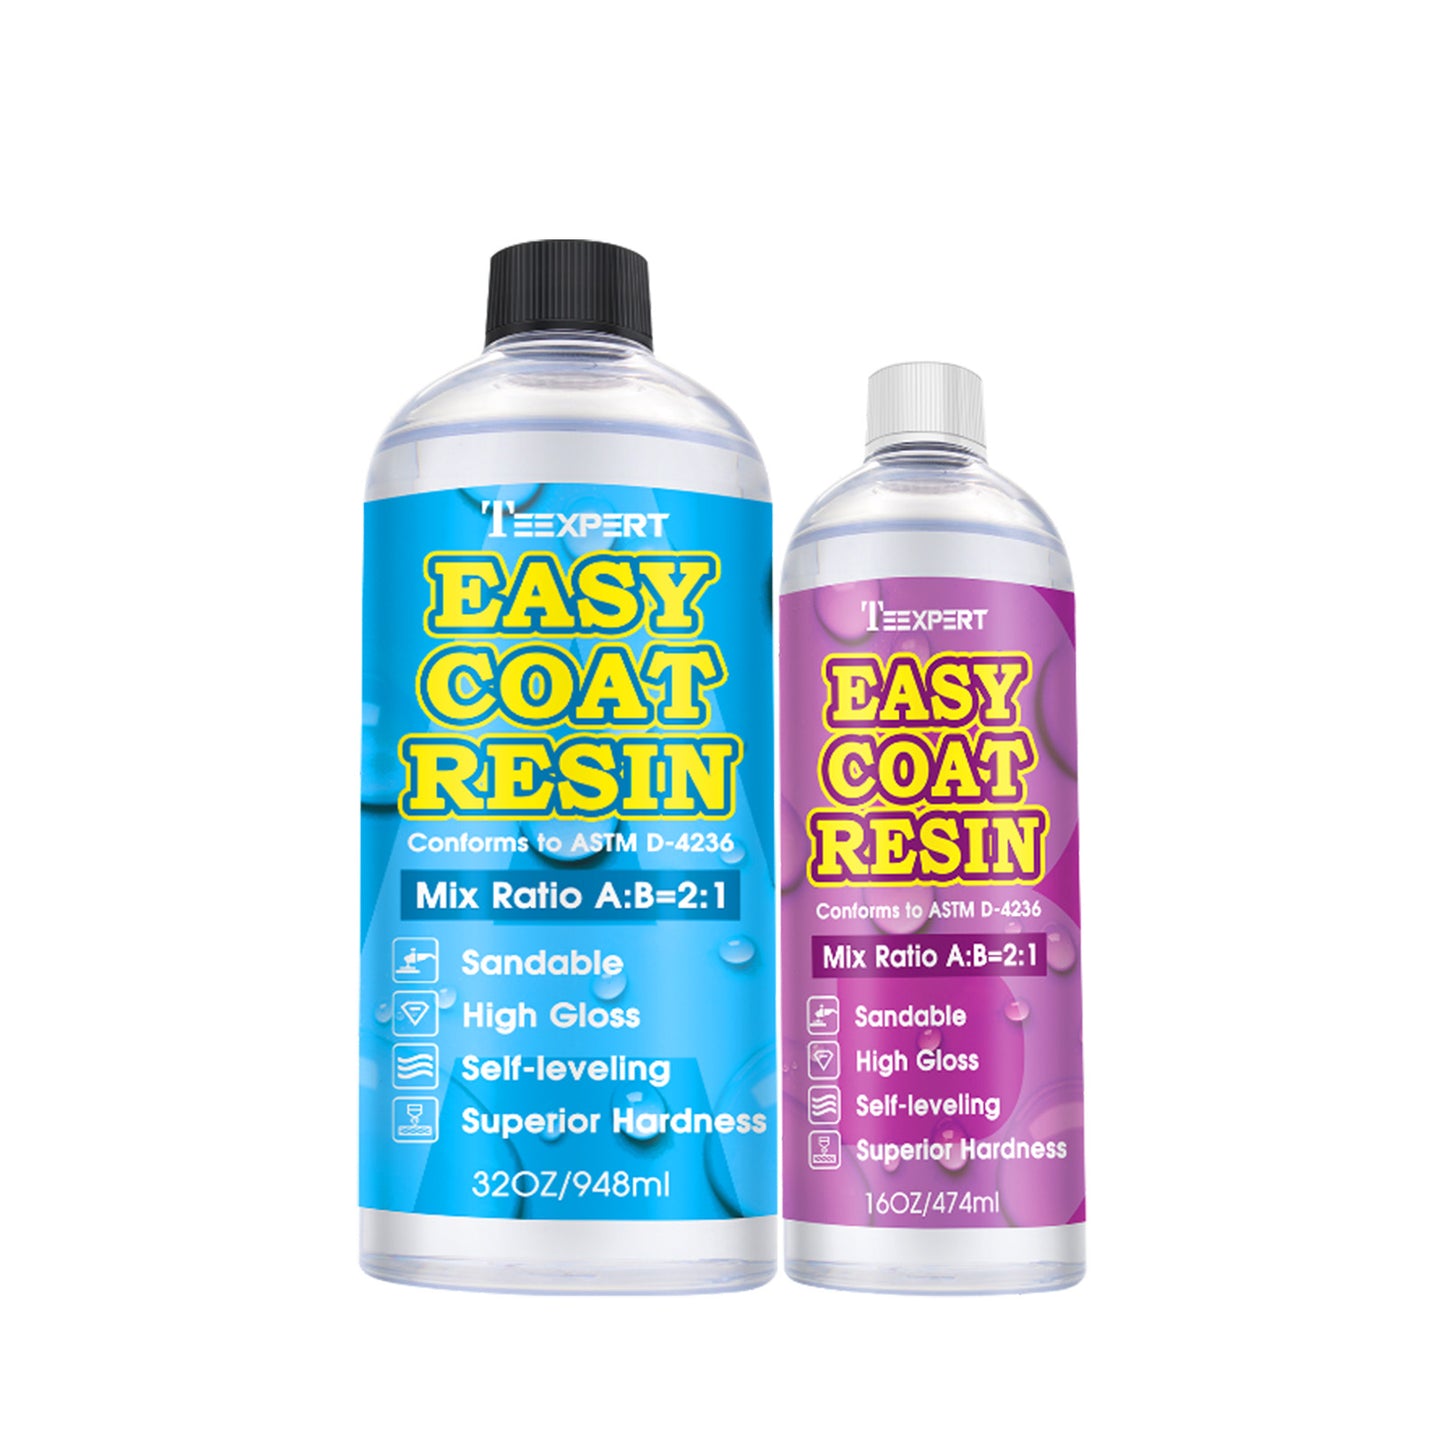 Teexpert Easy Coat Resin- Top Coating Epoxy Resin- 48OZ 2:1 Mix Ratio